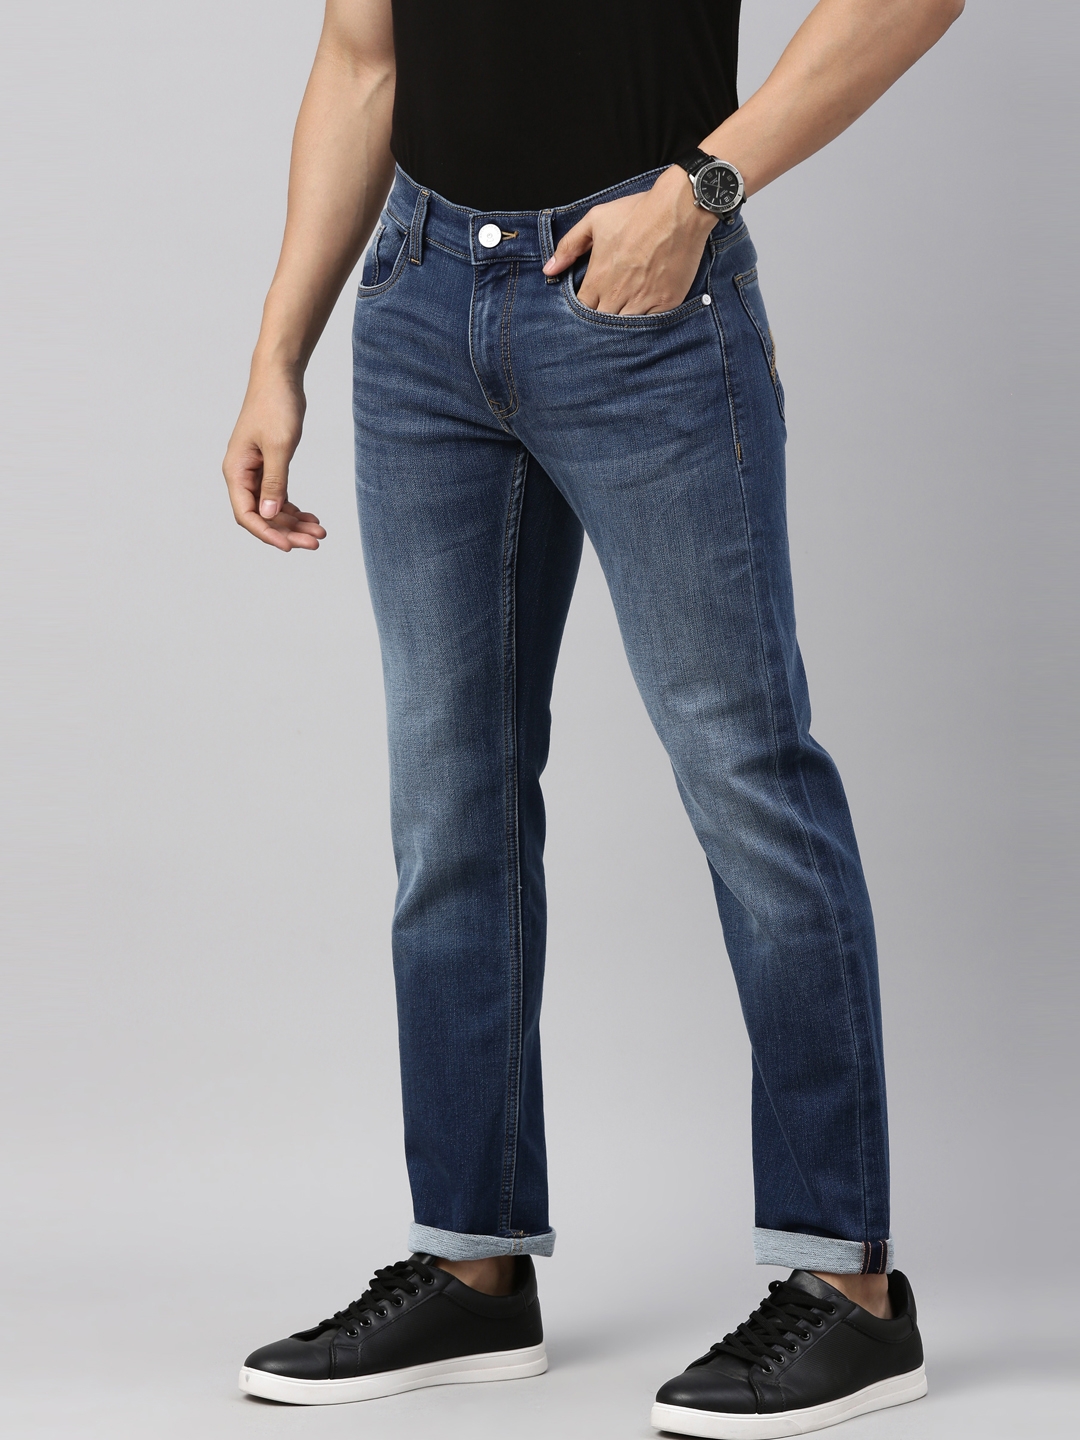 American Bull | American Bull Mens Denim Jeans With 5 Pockets 2